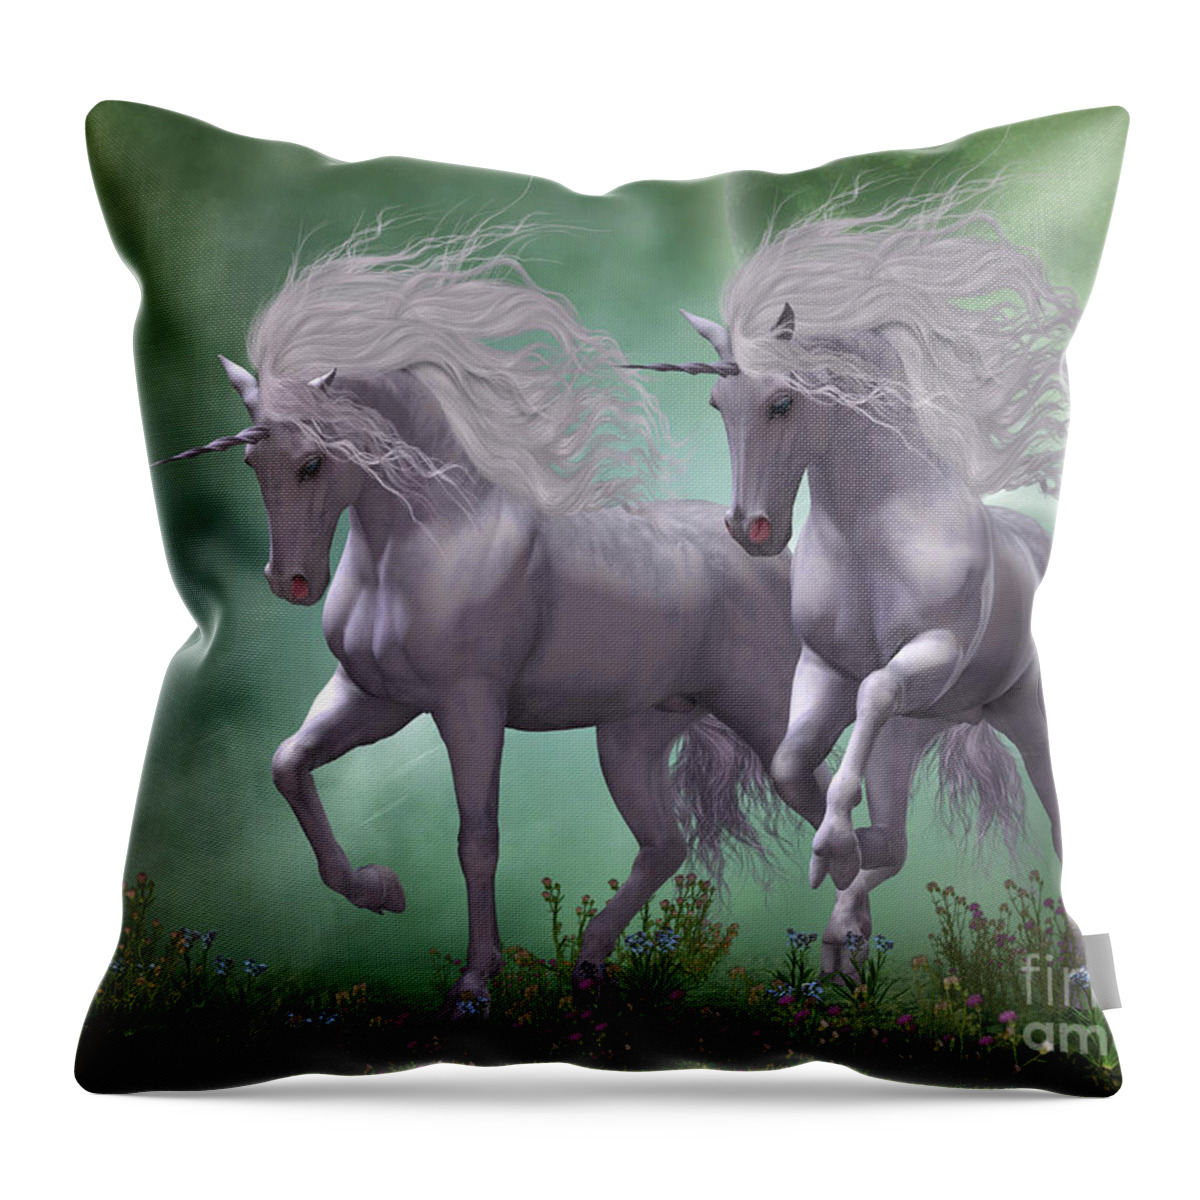 Unicorn Throw Pillow featuring the digital art Moonlight Unicorns by Corey Ford